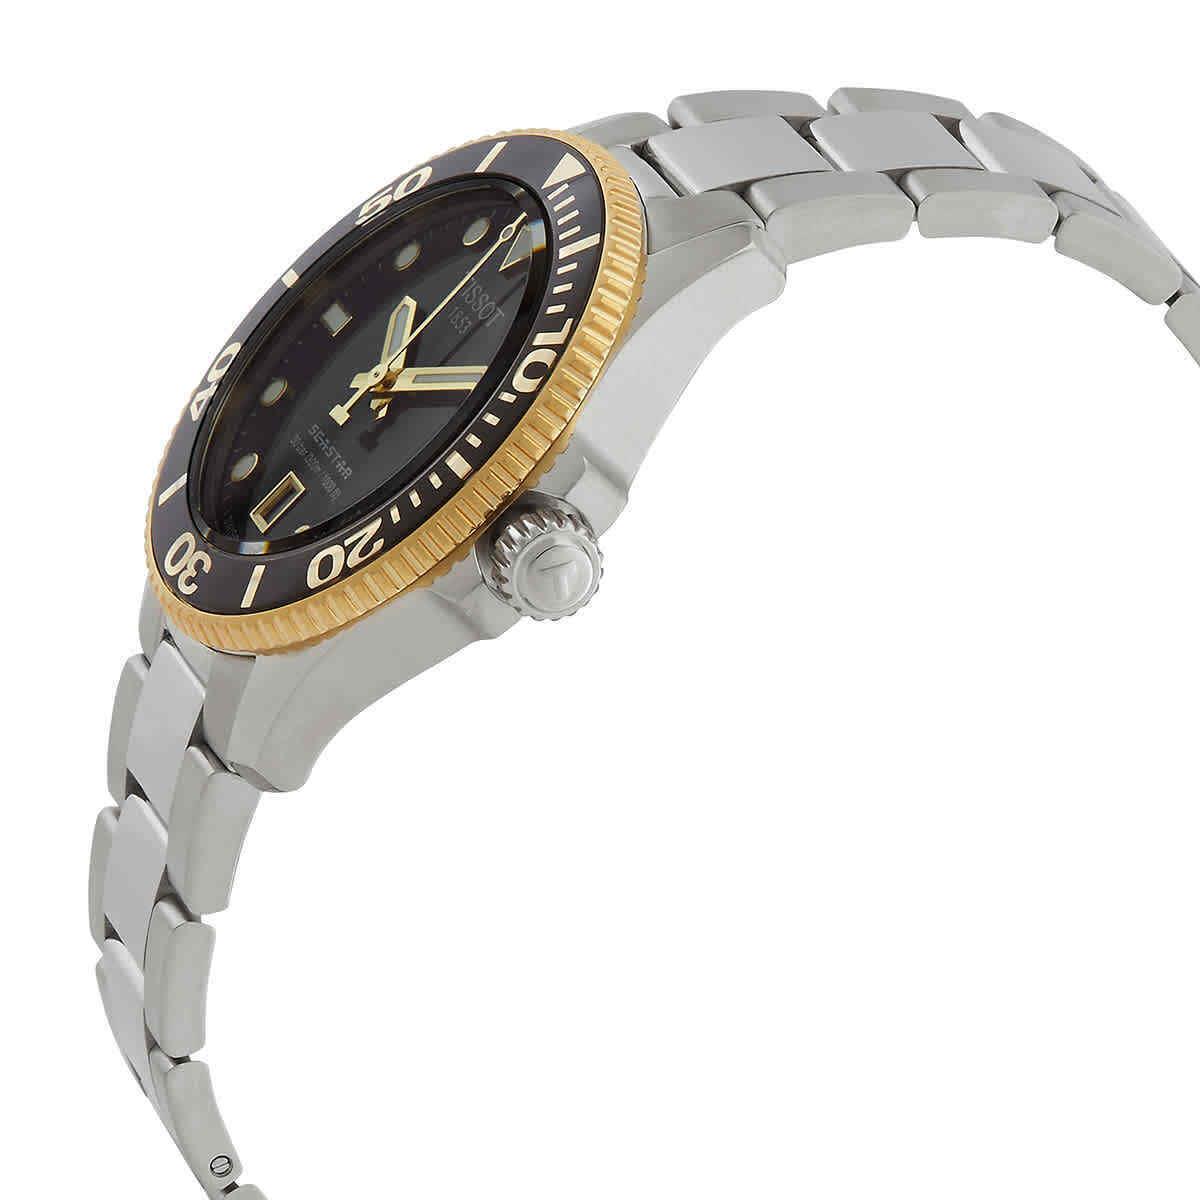 Tissot Seastar 1000 Quartz Black Dial Unisex Watch T1202102105100